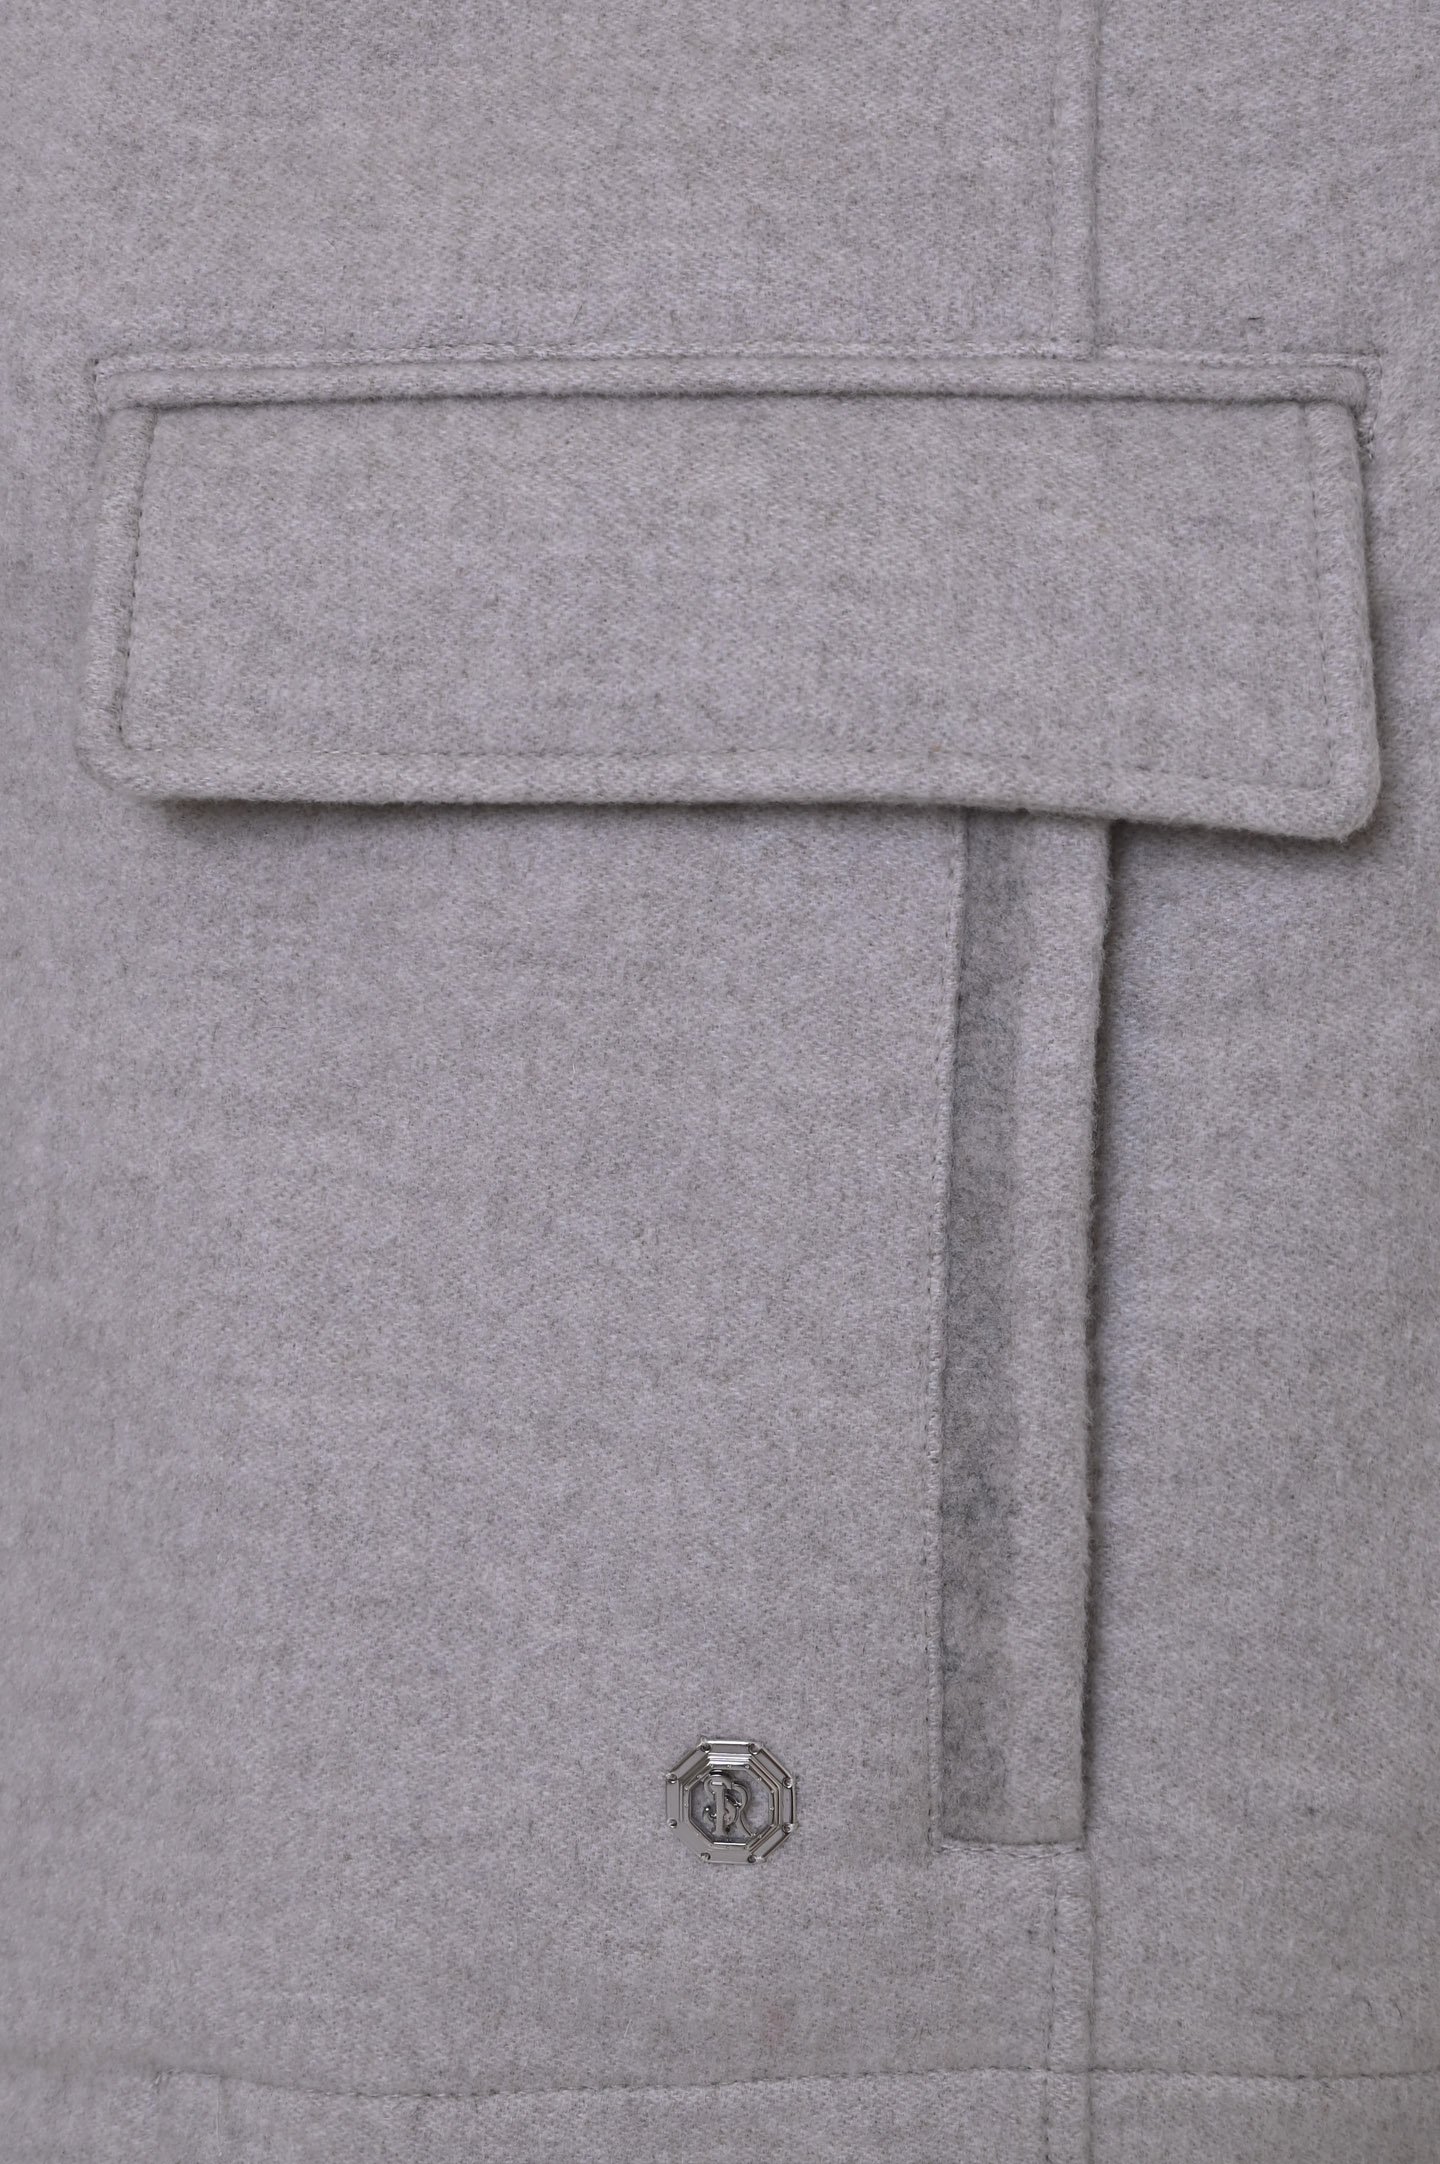 Куртка STEFANO RICCI MDJ9300280 4403, цвет: Серый, Мужской